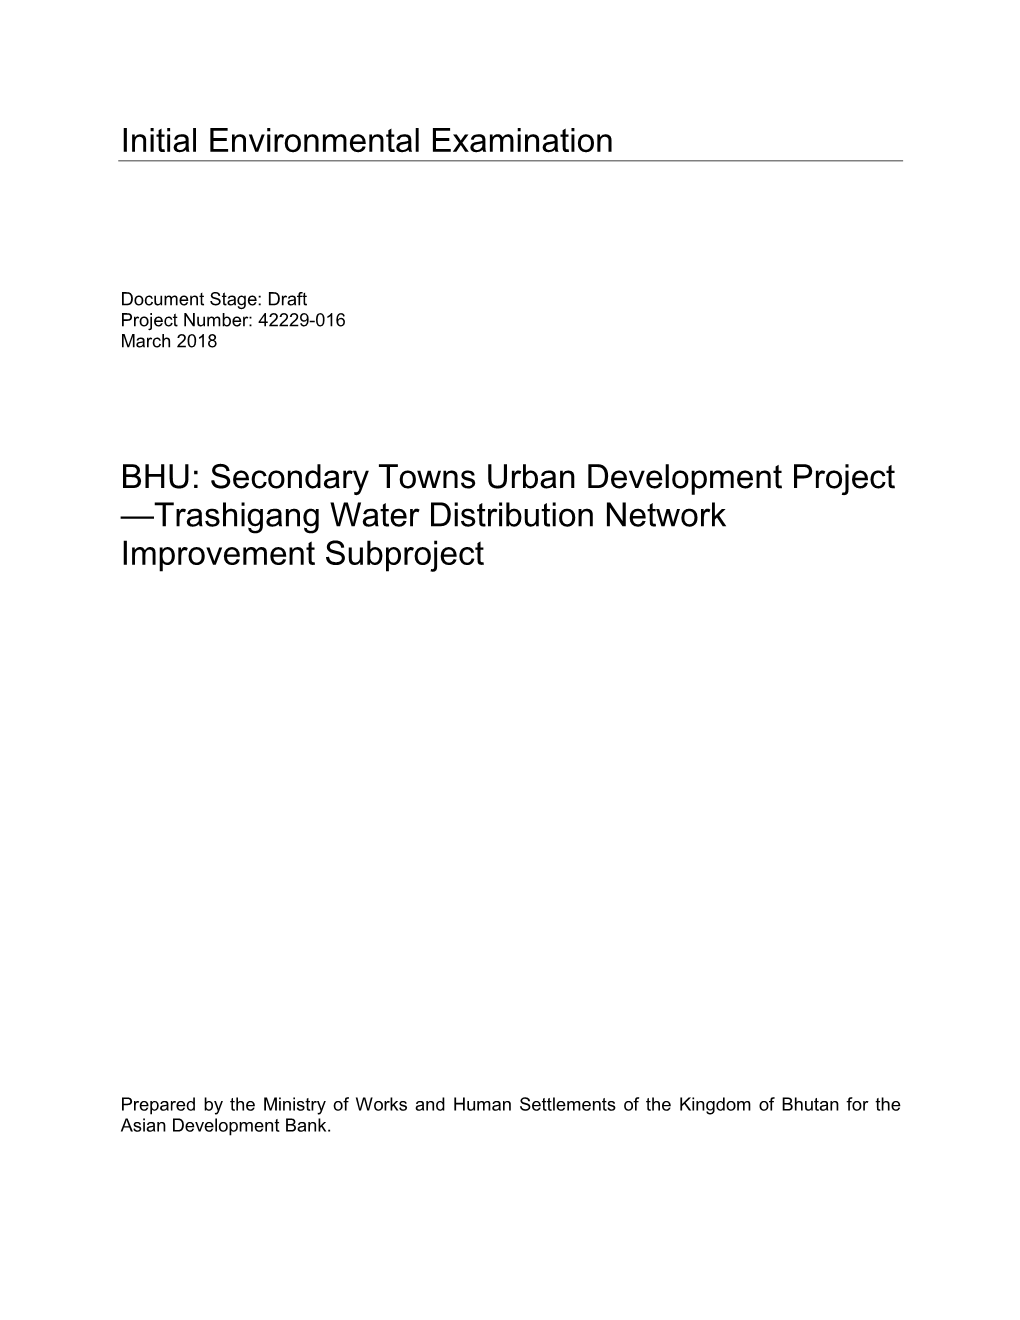 Secondary Towns Urban Development Project: Trashigang